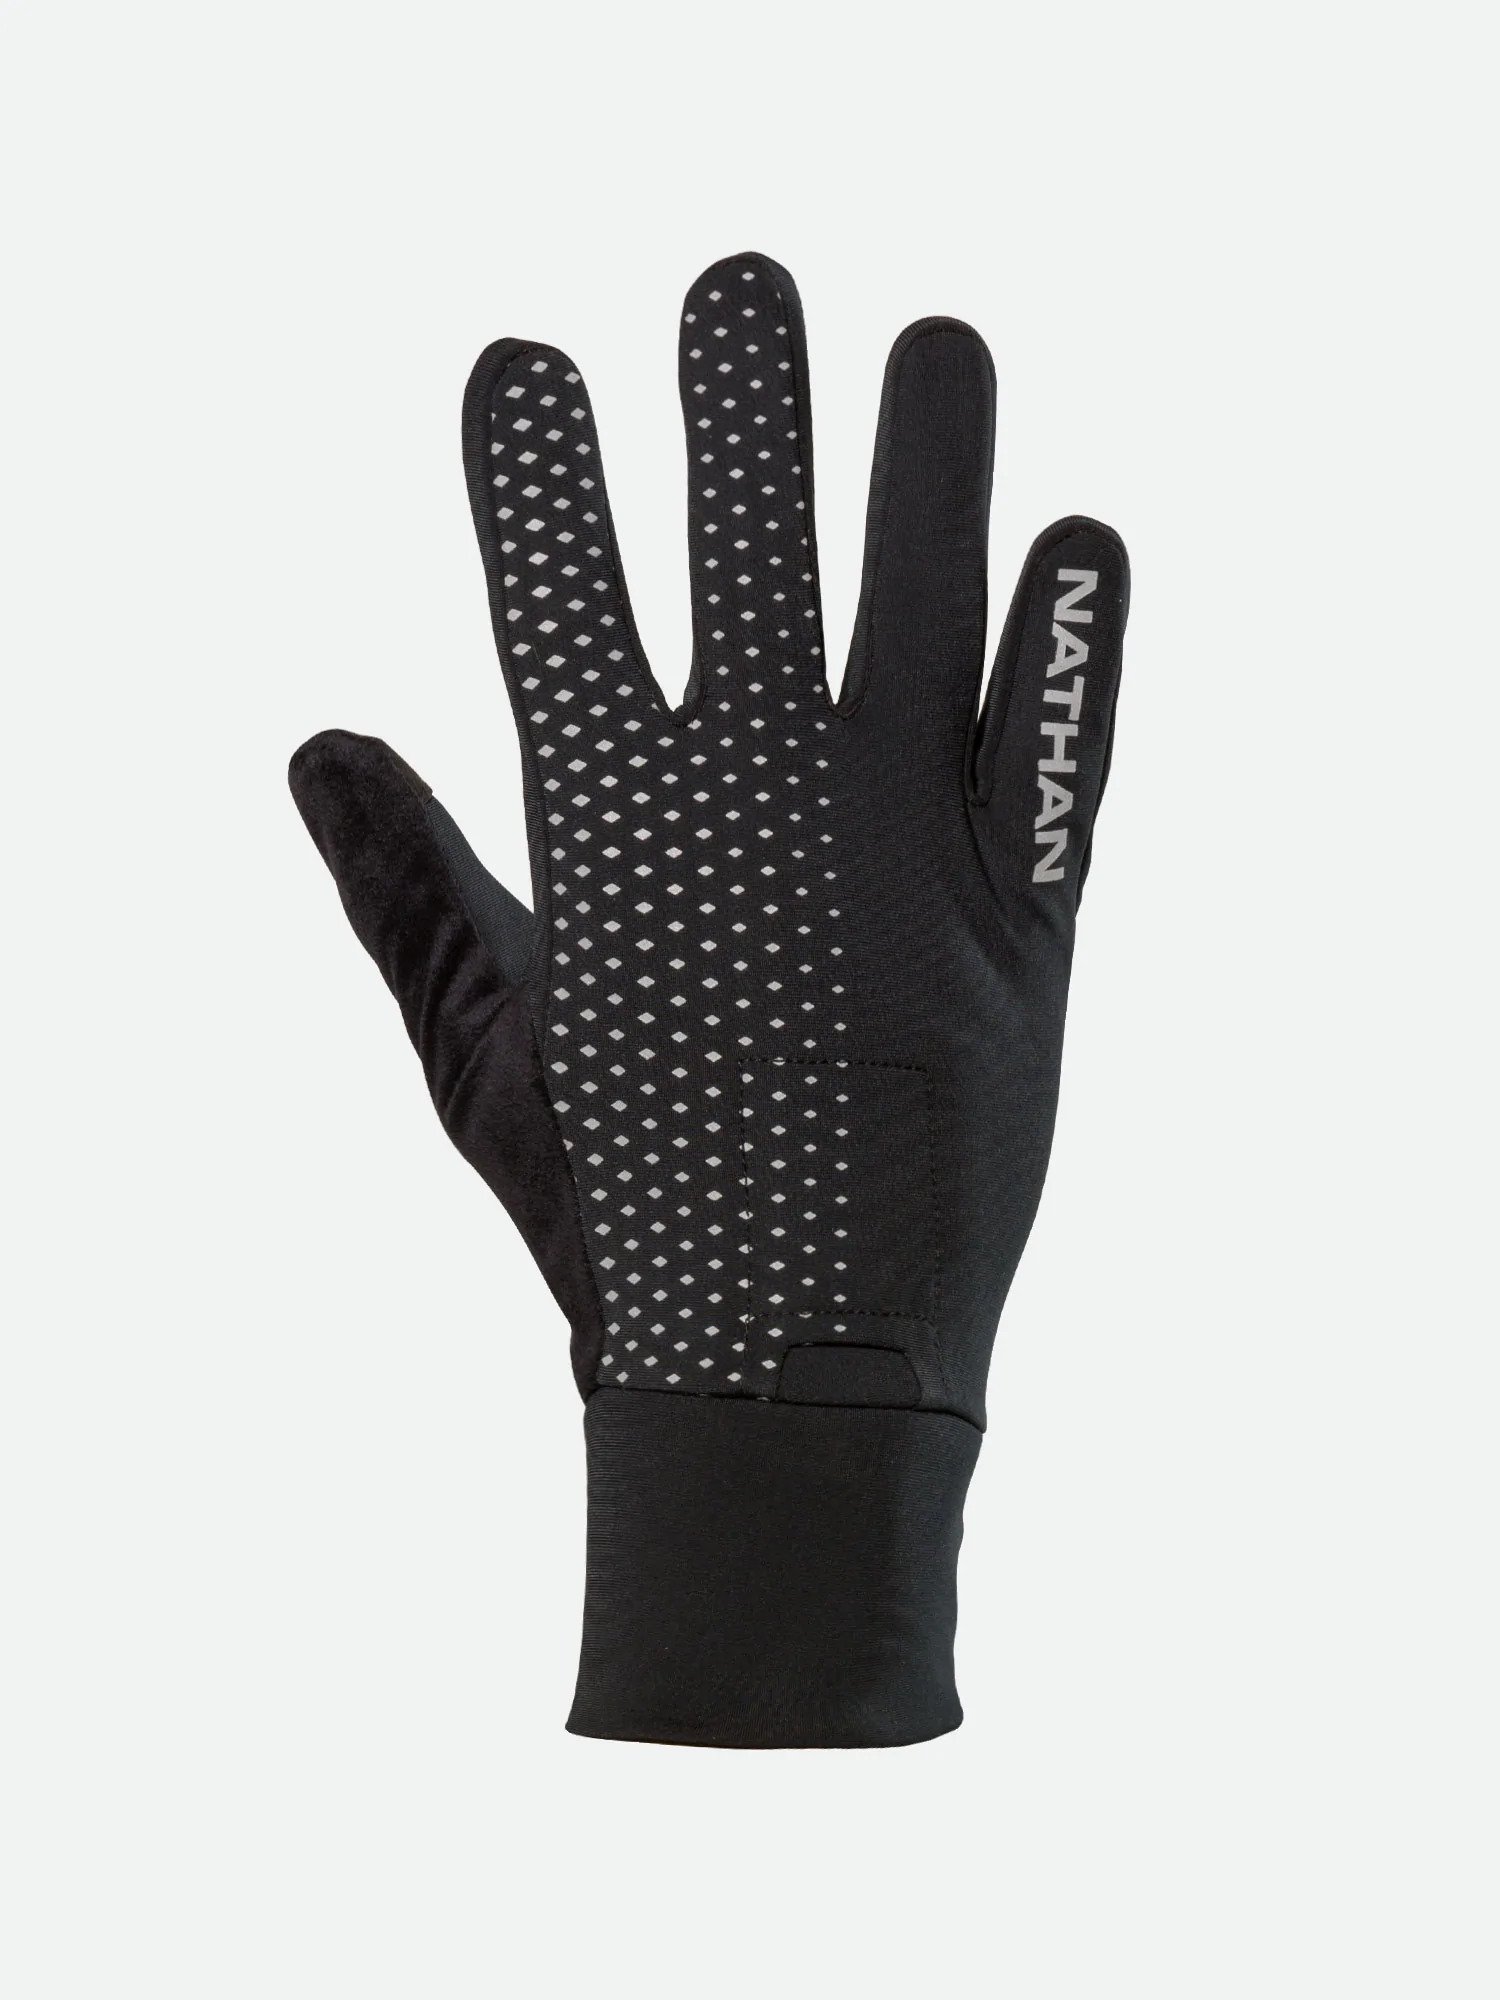 Nathan Hypernight Reflective Gloves